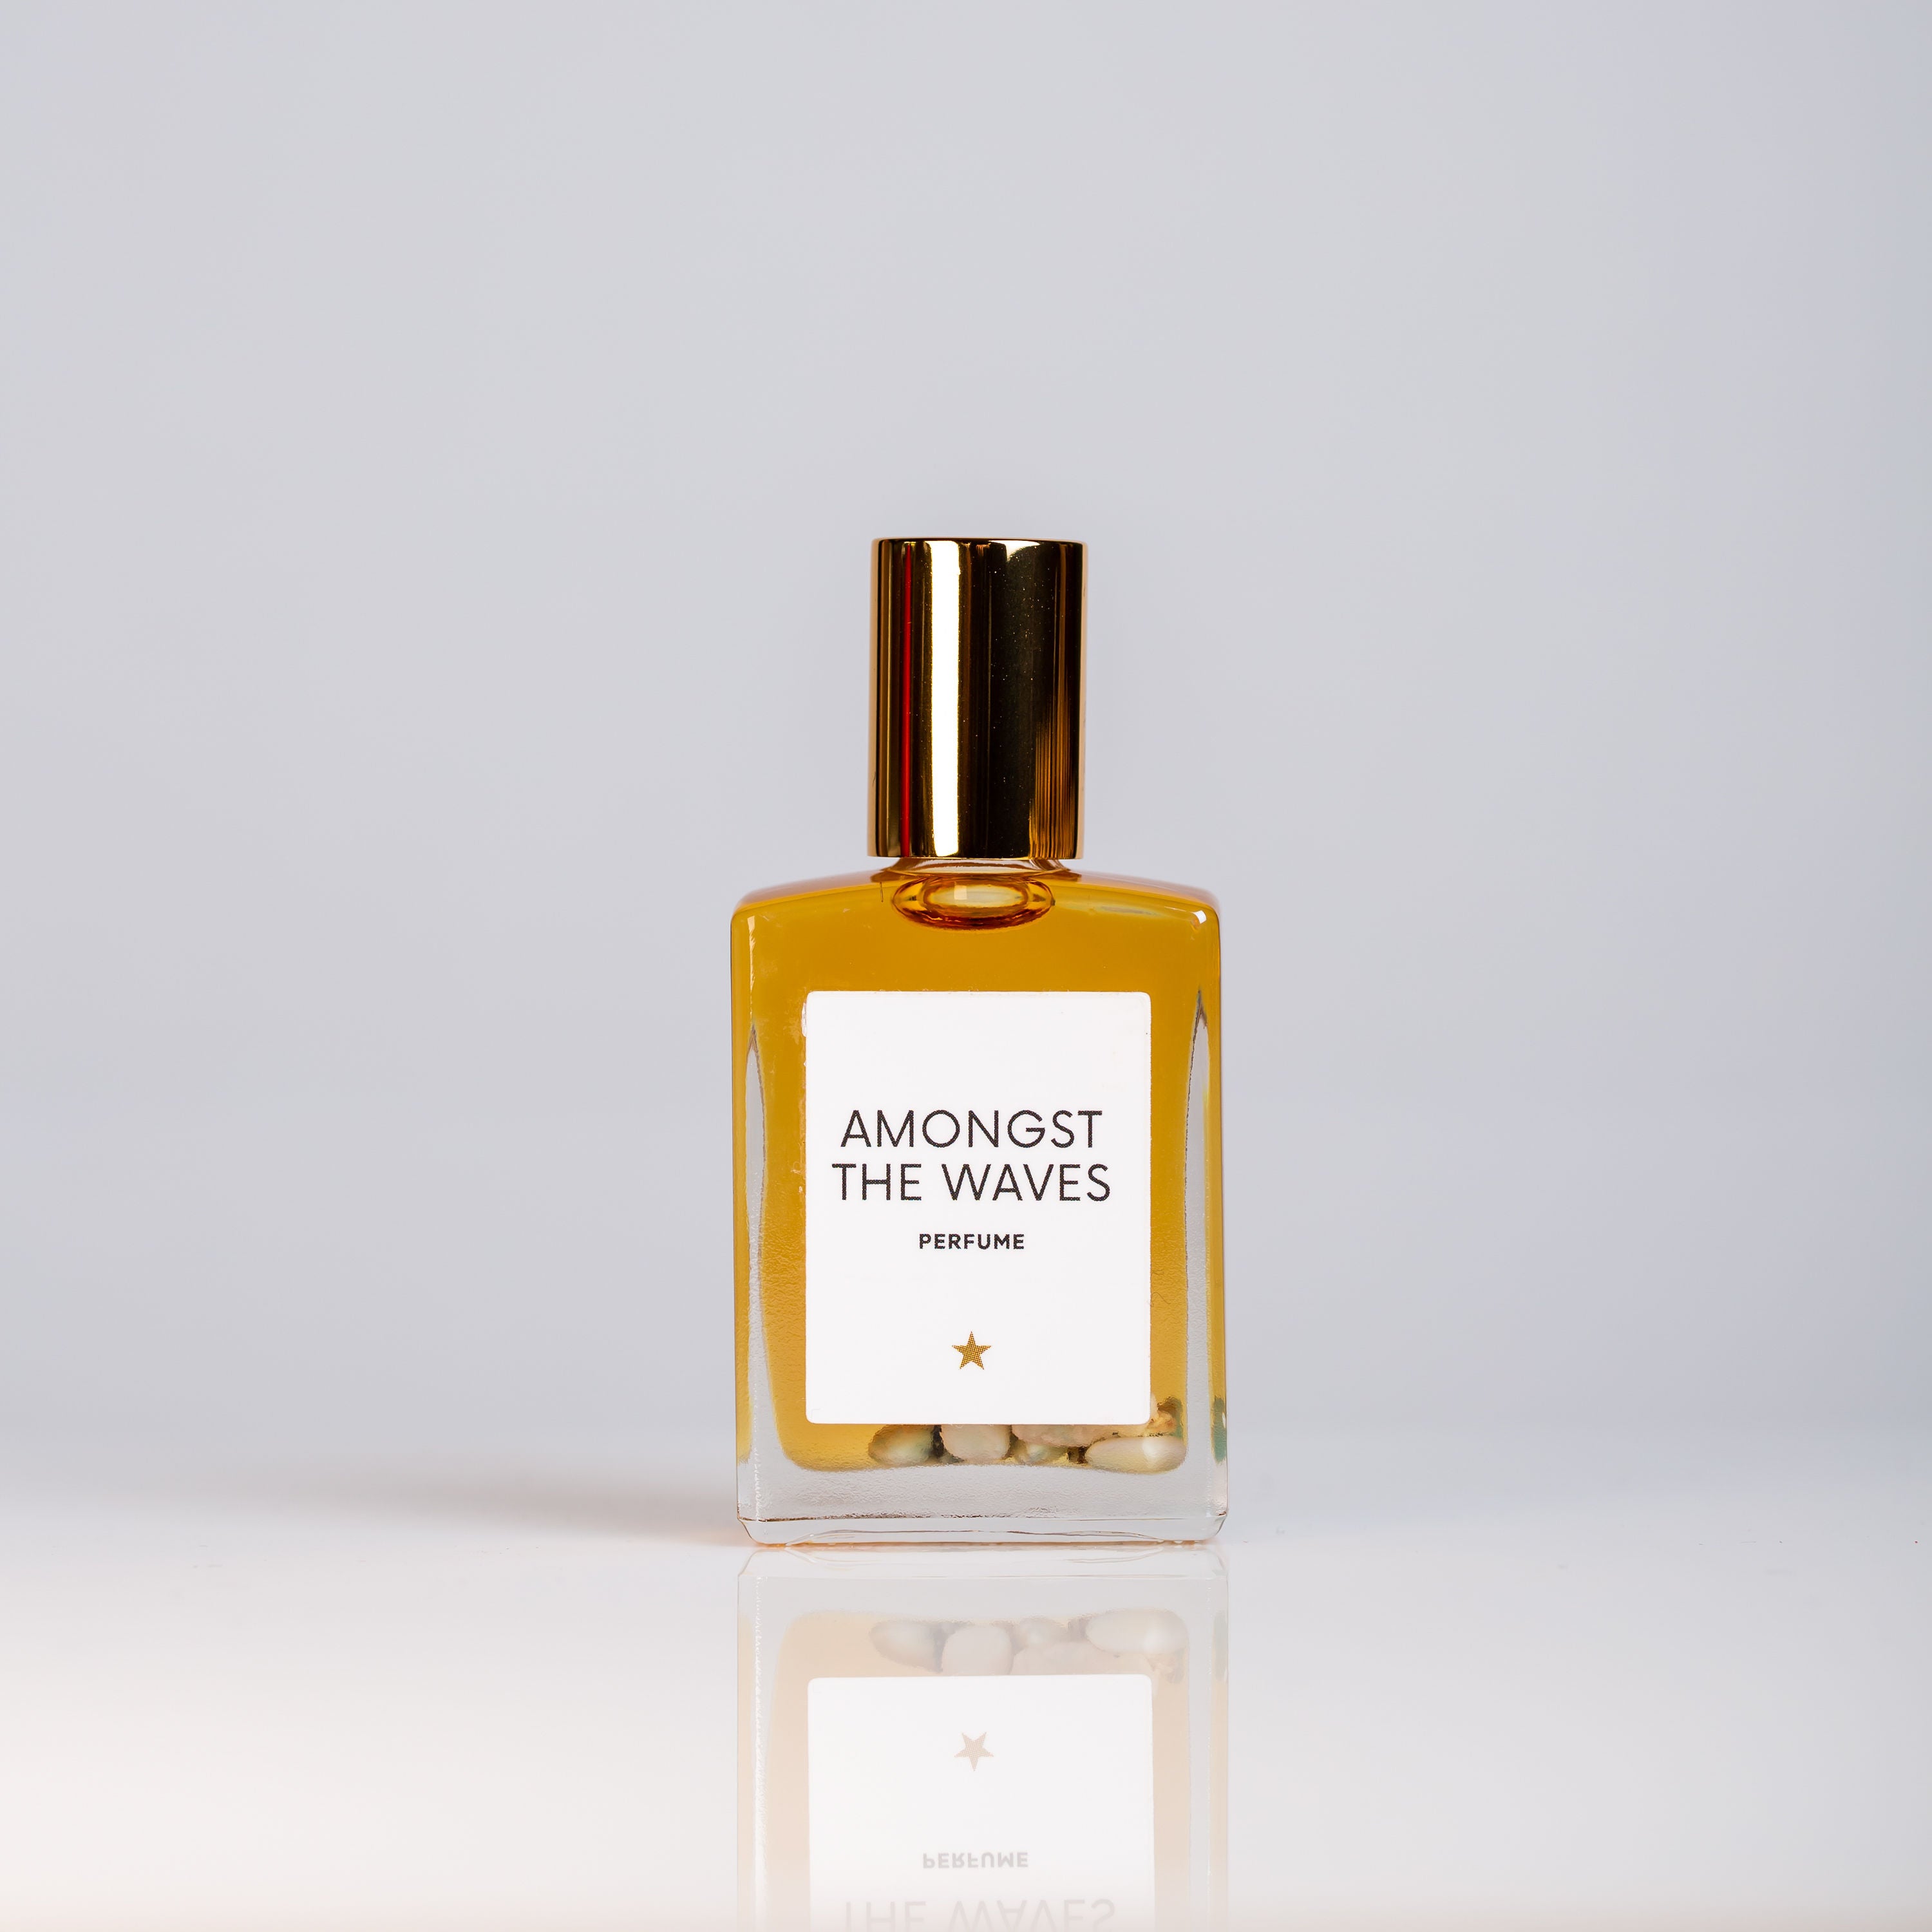 Chanel #5 - Fragrance Oil